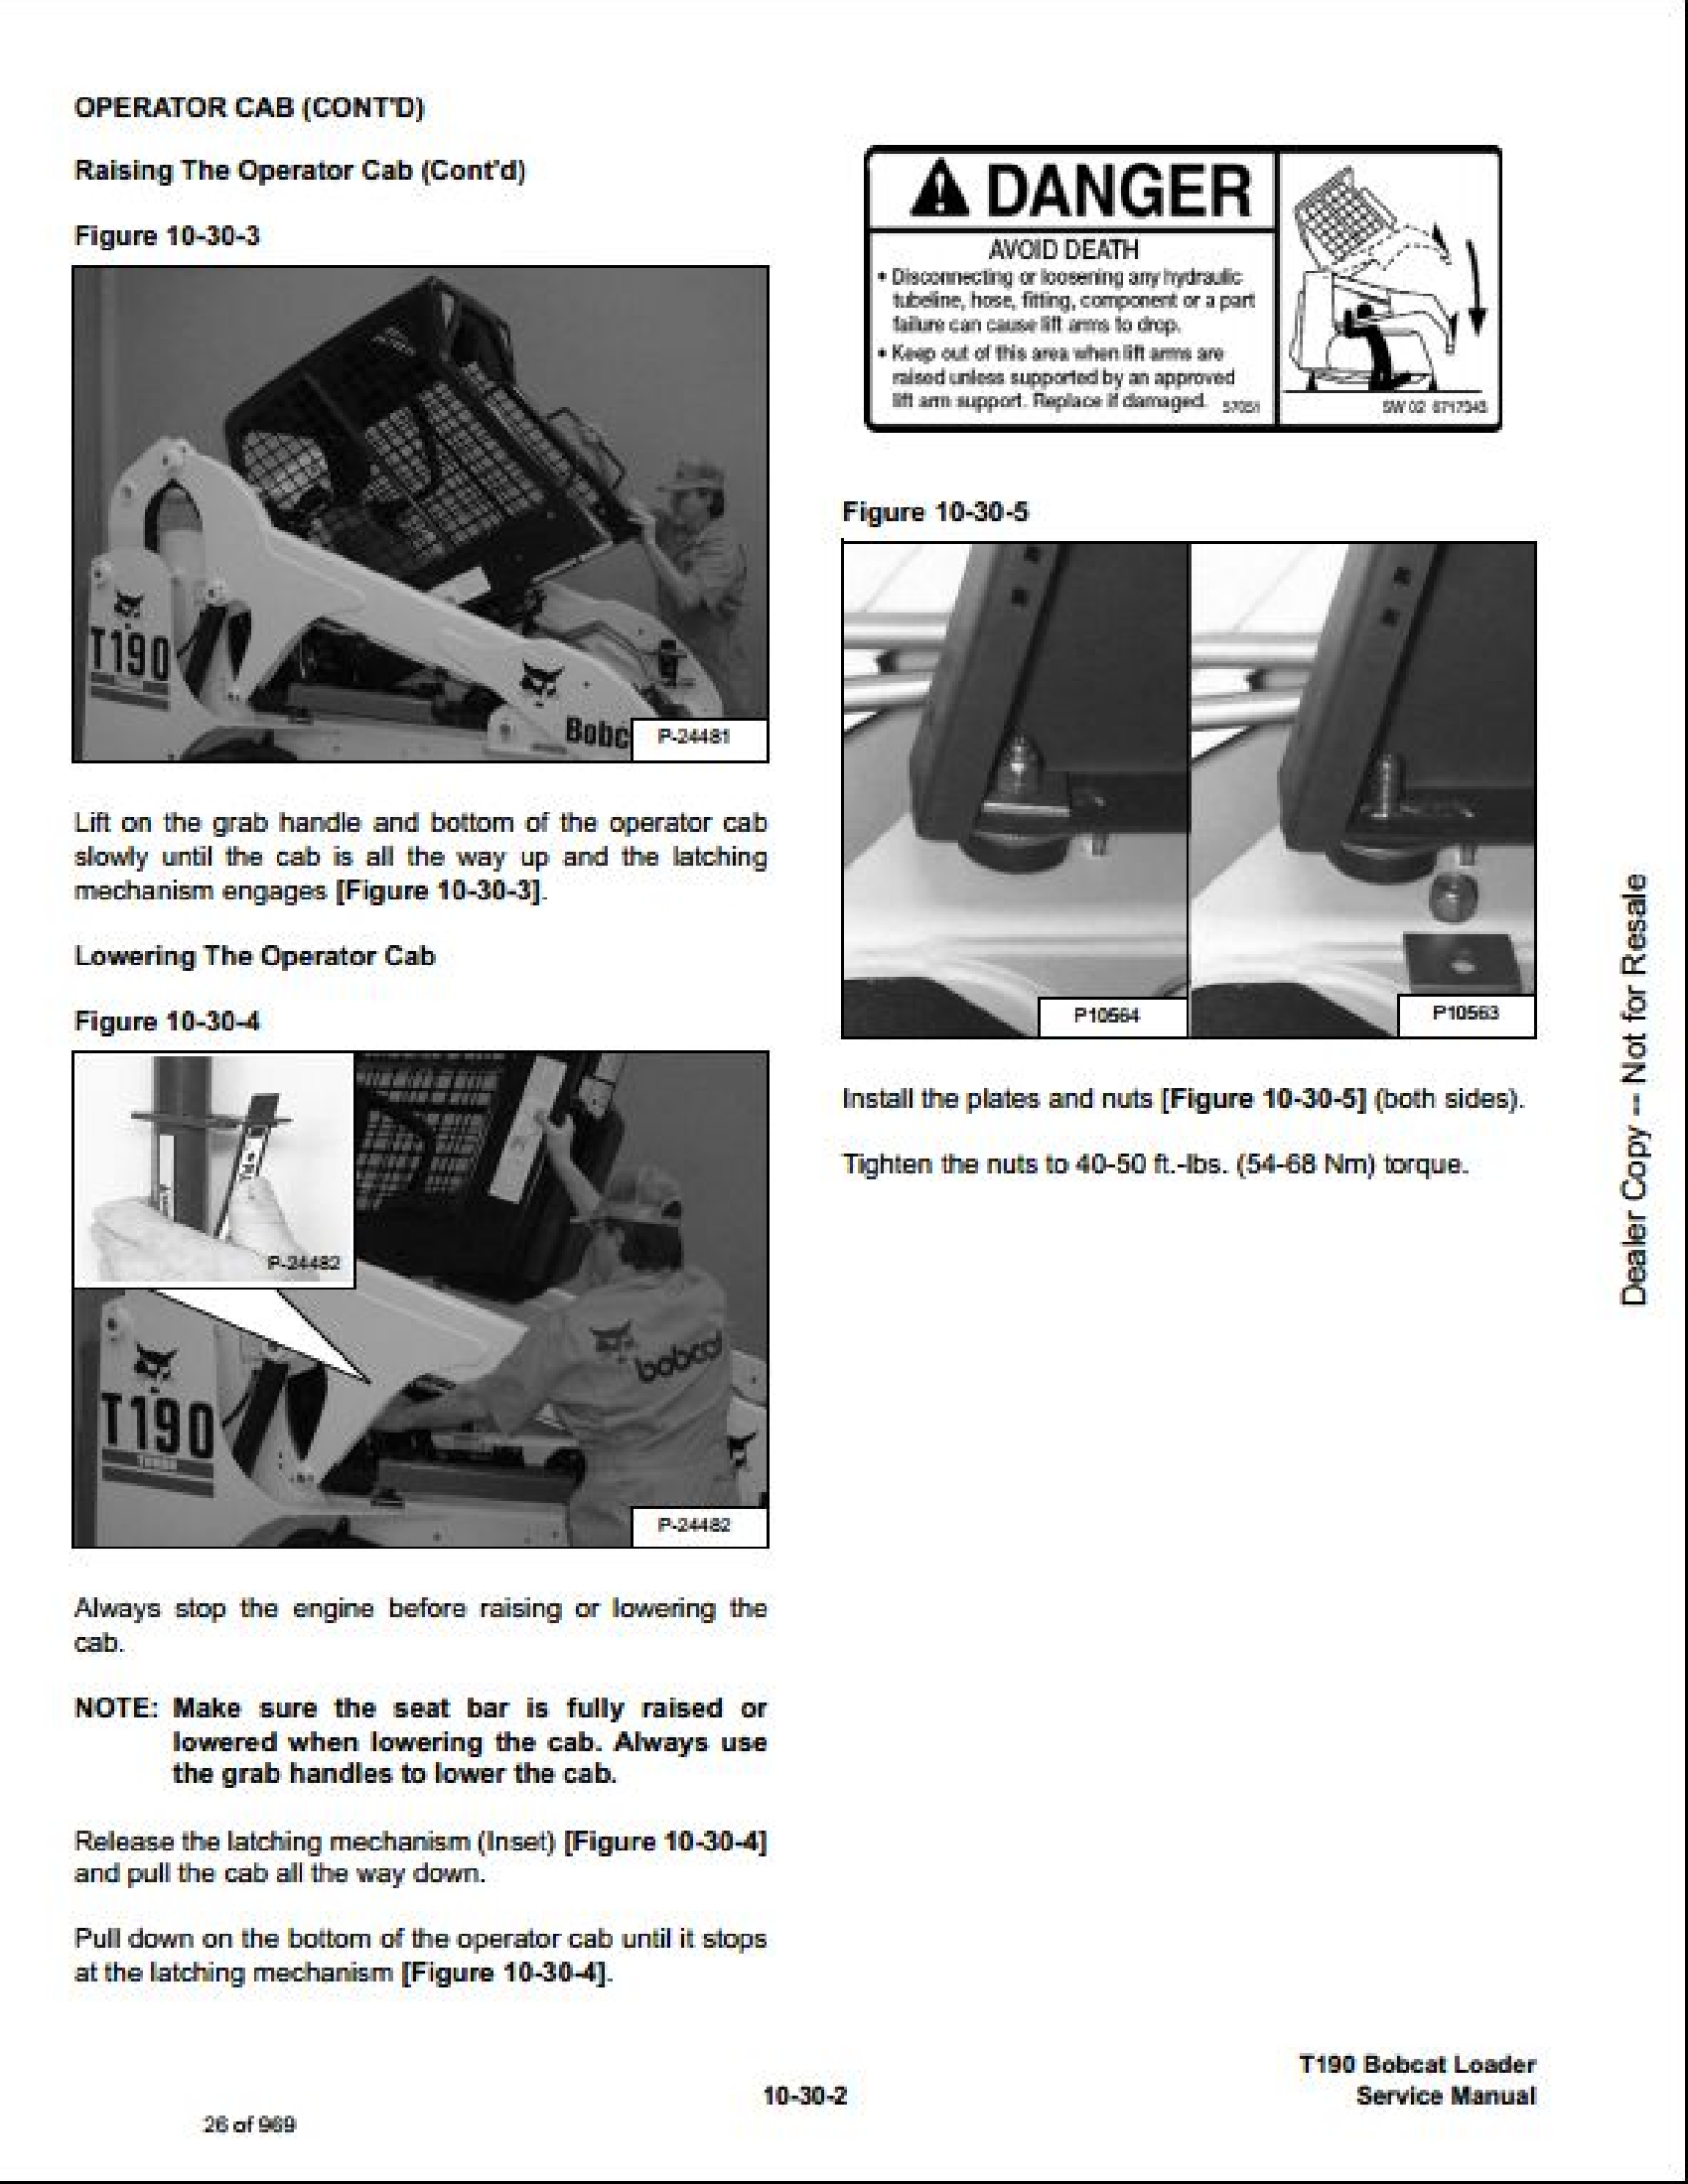 Bobcat S175 Skid Steer Loader manual